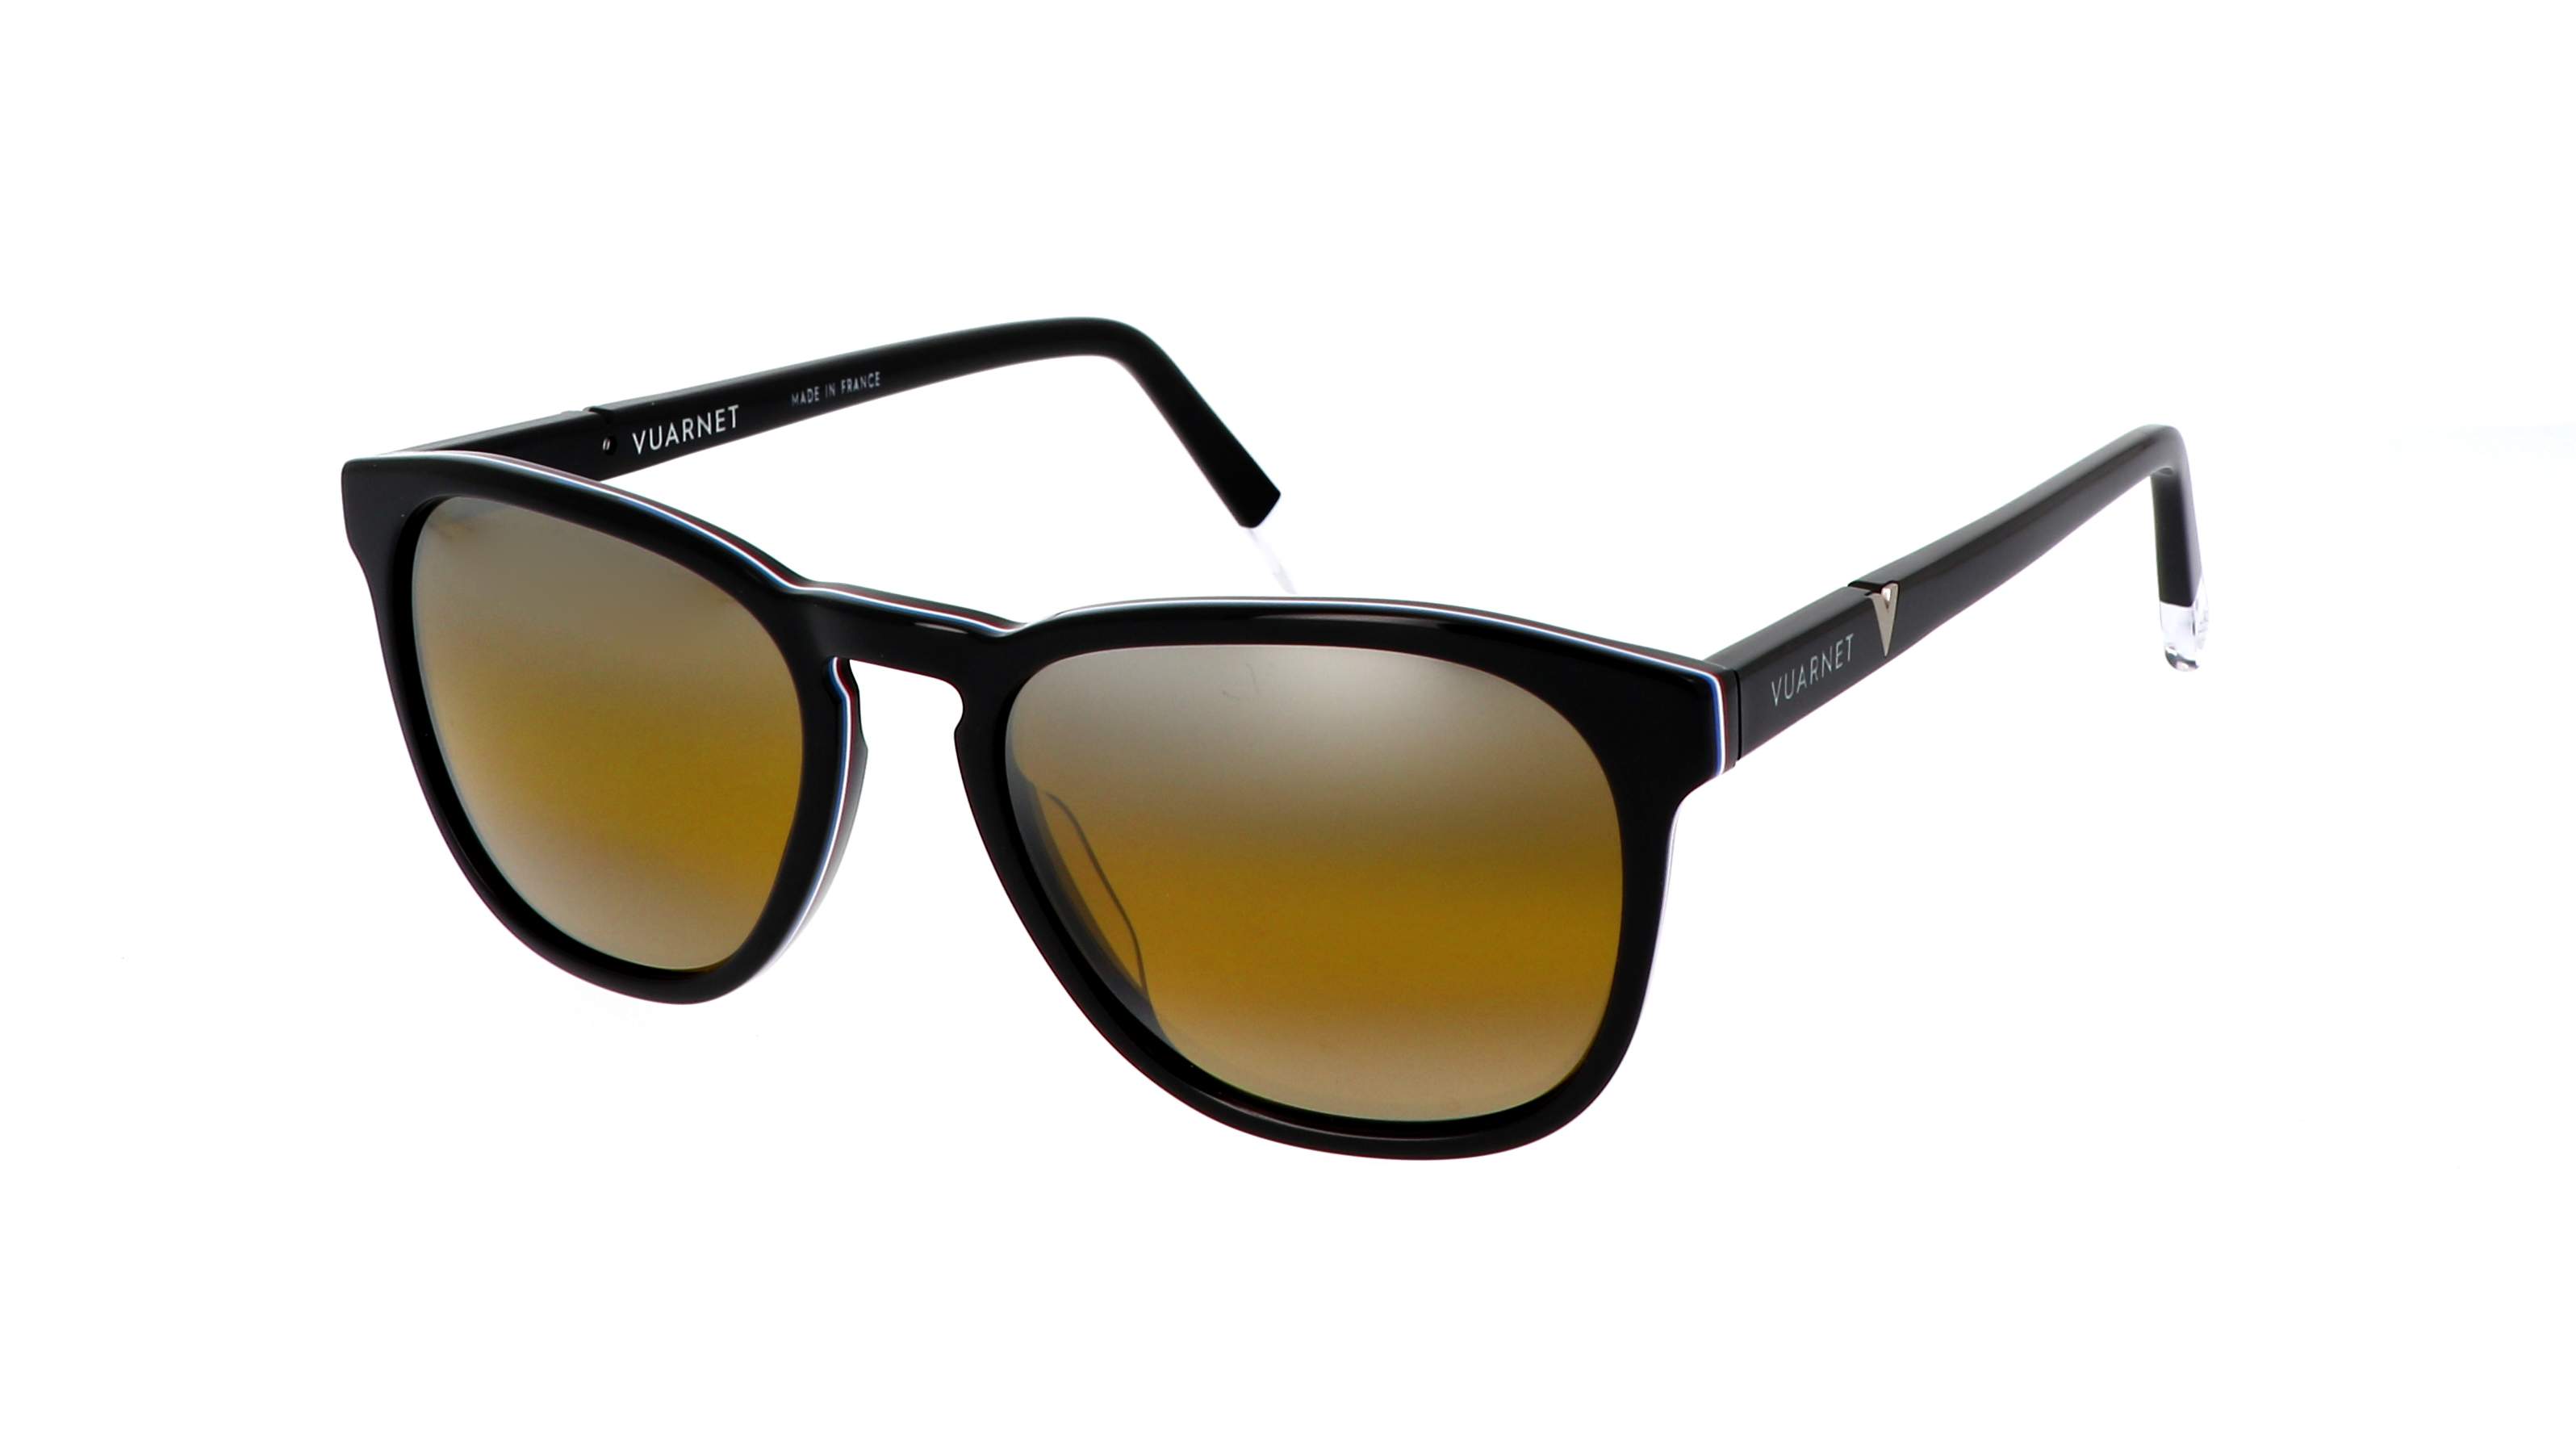 Sunglasses Vuarnet District Black Matte Skilynx VL1622 0018 54-18